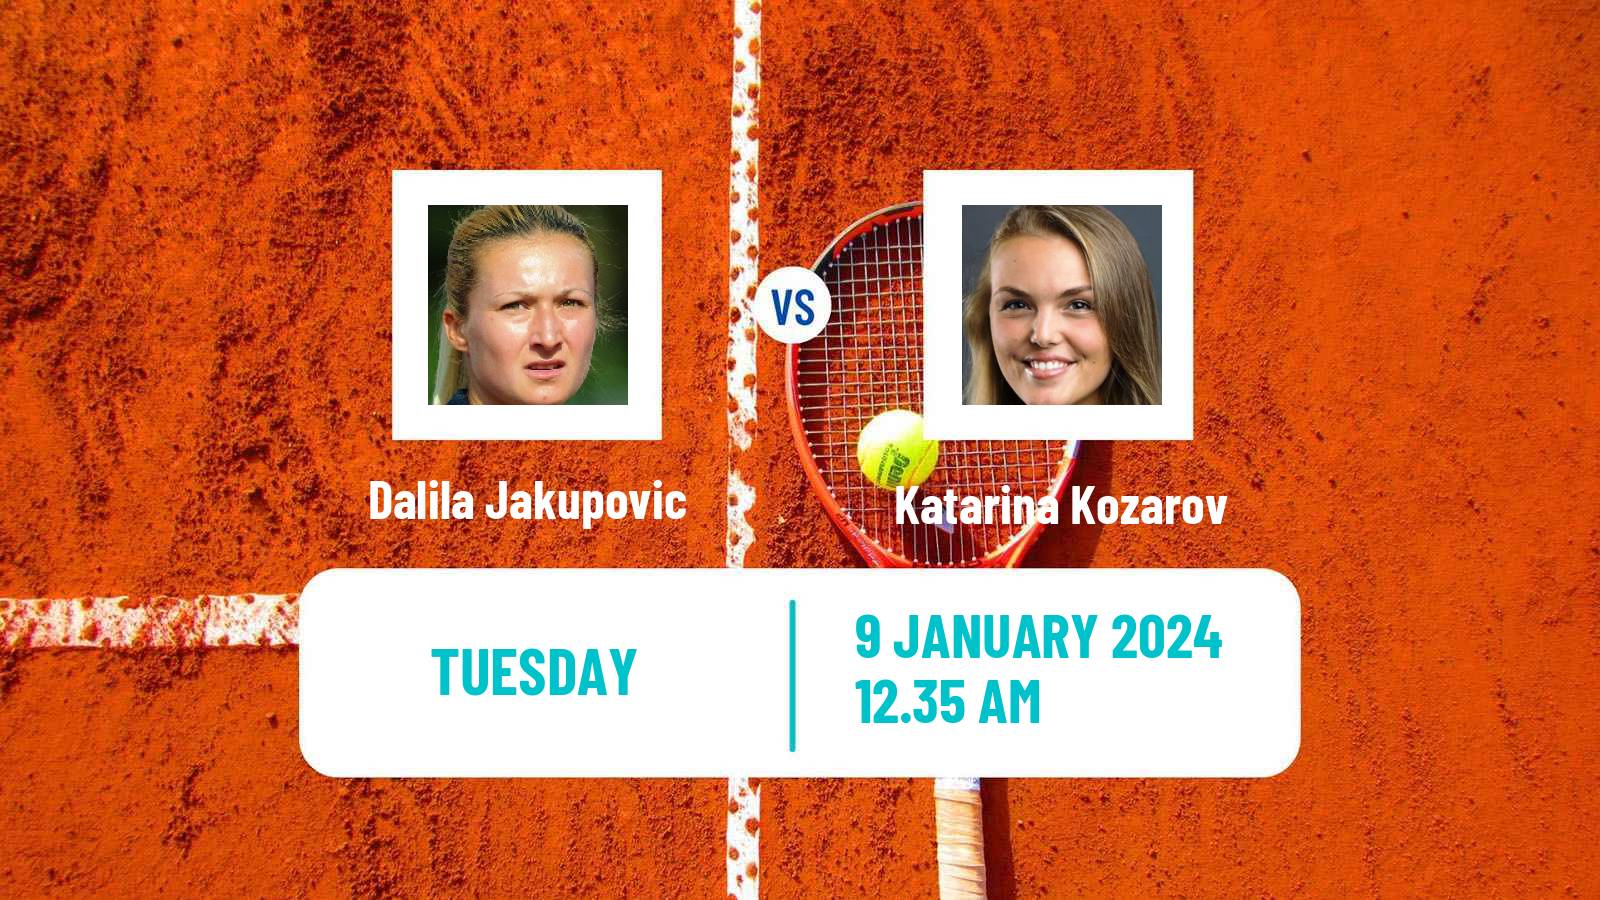 Tennis ITF W50 Nonthaburi 2 Women Dalila Jakupovic - Katarina Kozarov